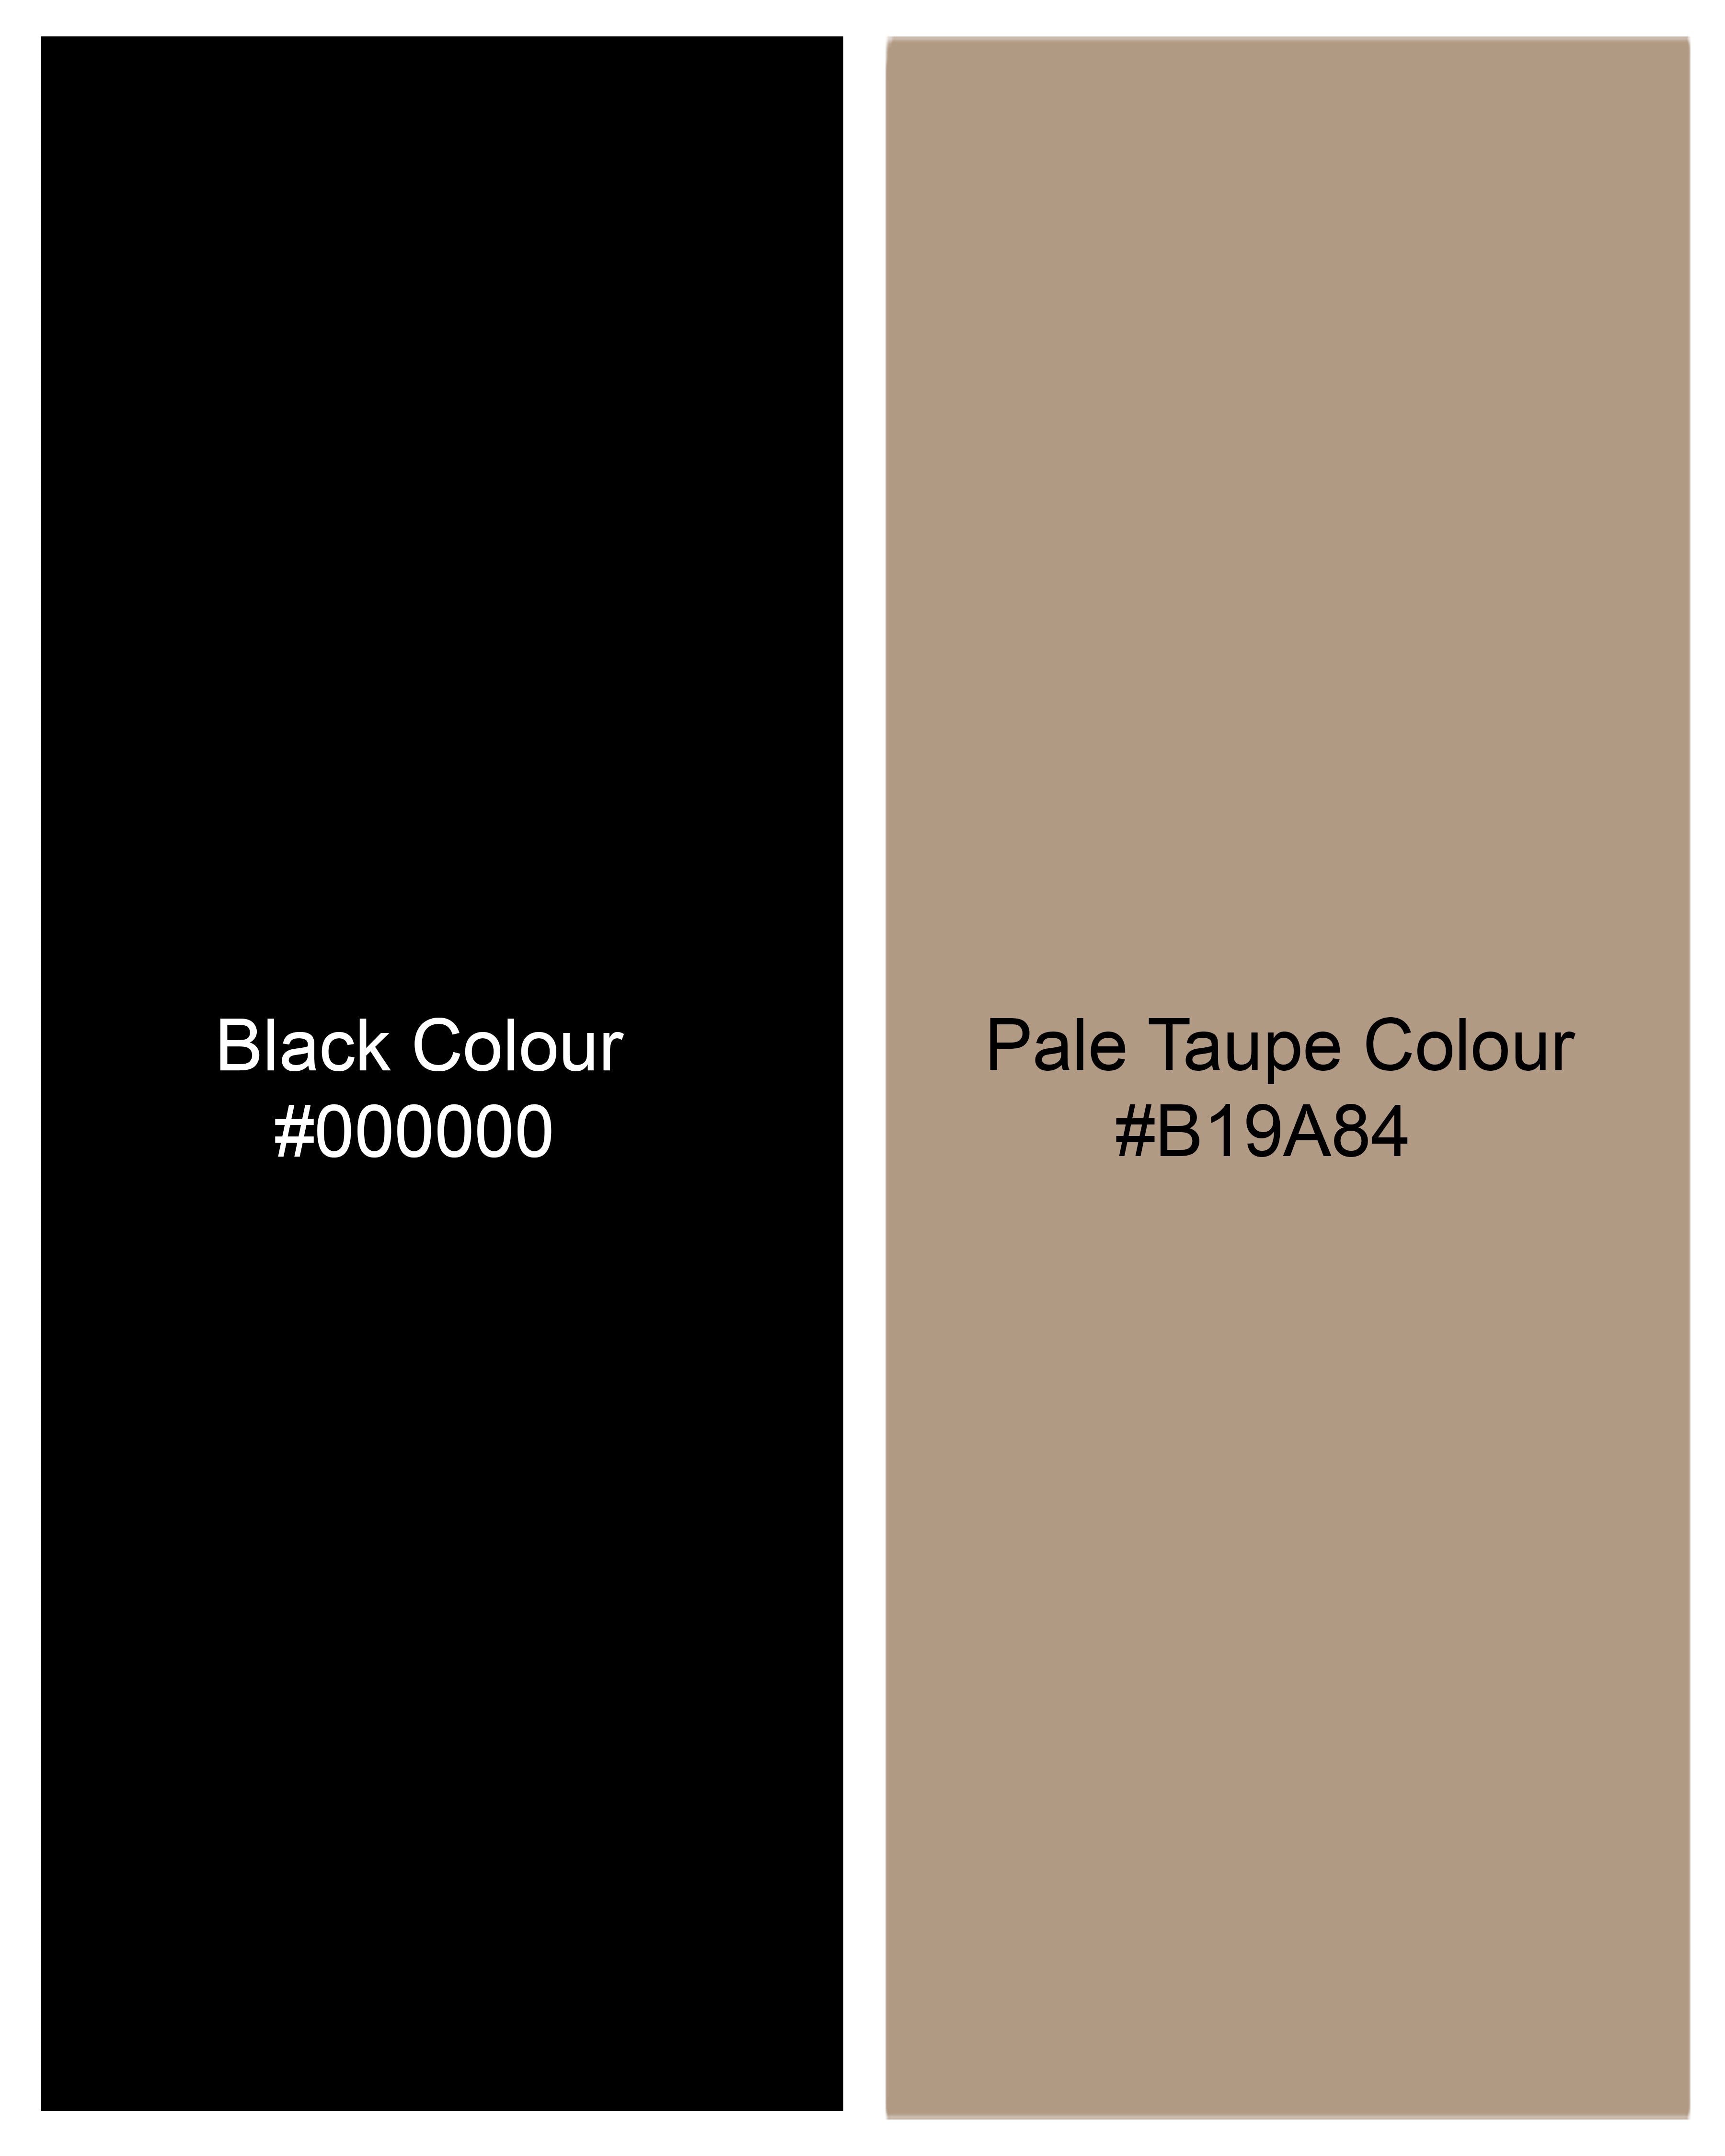 Jade Black with Pale Taupe Brown Cotton Thread Embroidered Bandhgala Blazer BL2414-BG-36,BL2414-BG-38,BL2414-BG-40,BL2414-BG-42,BL2414-BG-44,BL2414-BG-46,BL2414-BG-48,BL2414-BG-50,BL2414-BG-52,BL2414-BG-54,BL2414-BG-56,BL2414-BG-58,BL2414-BG-60